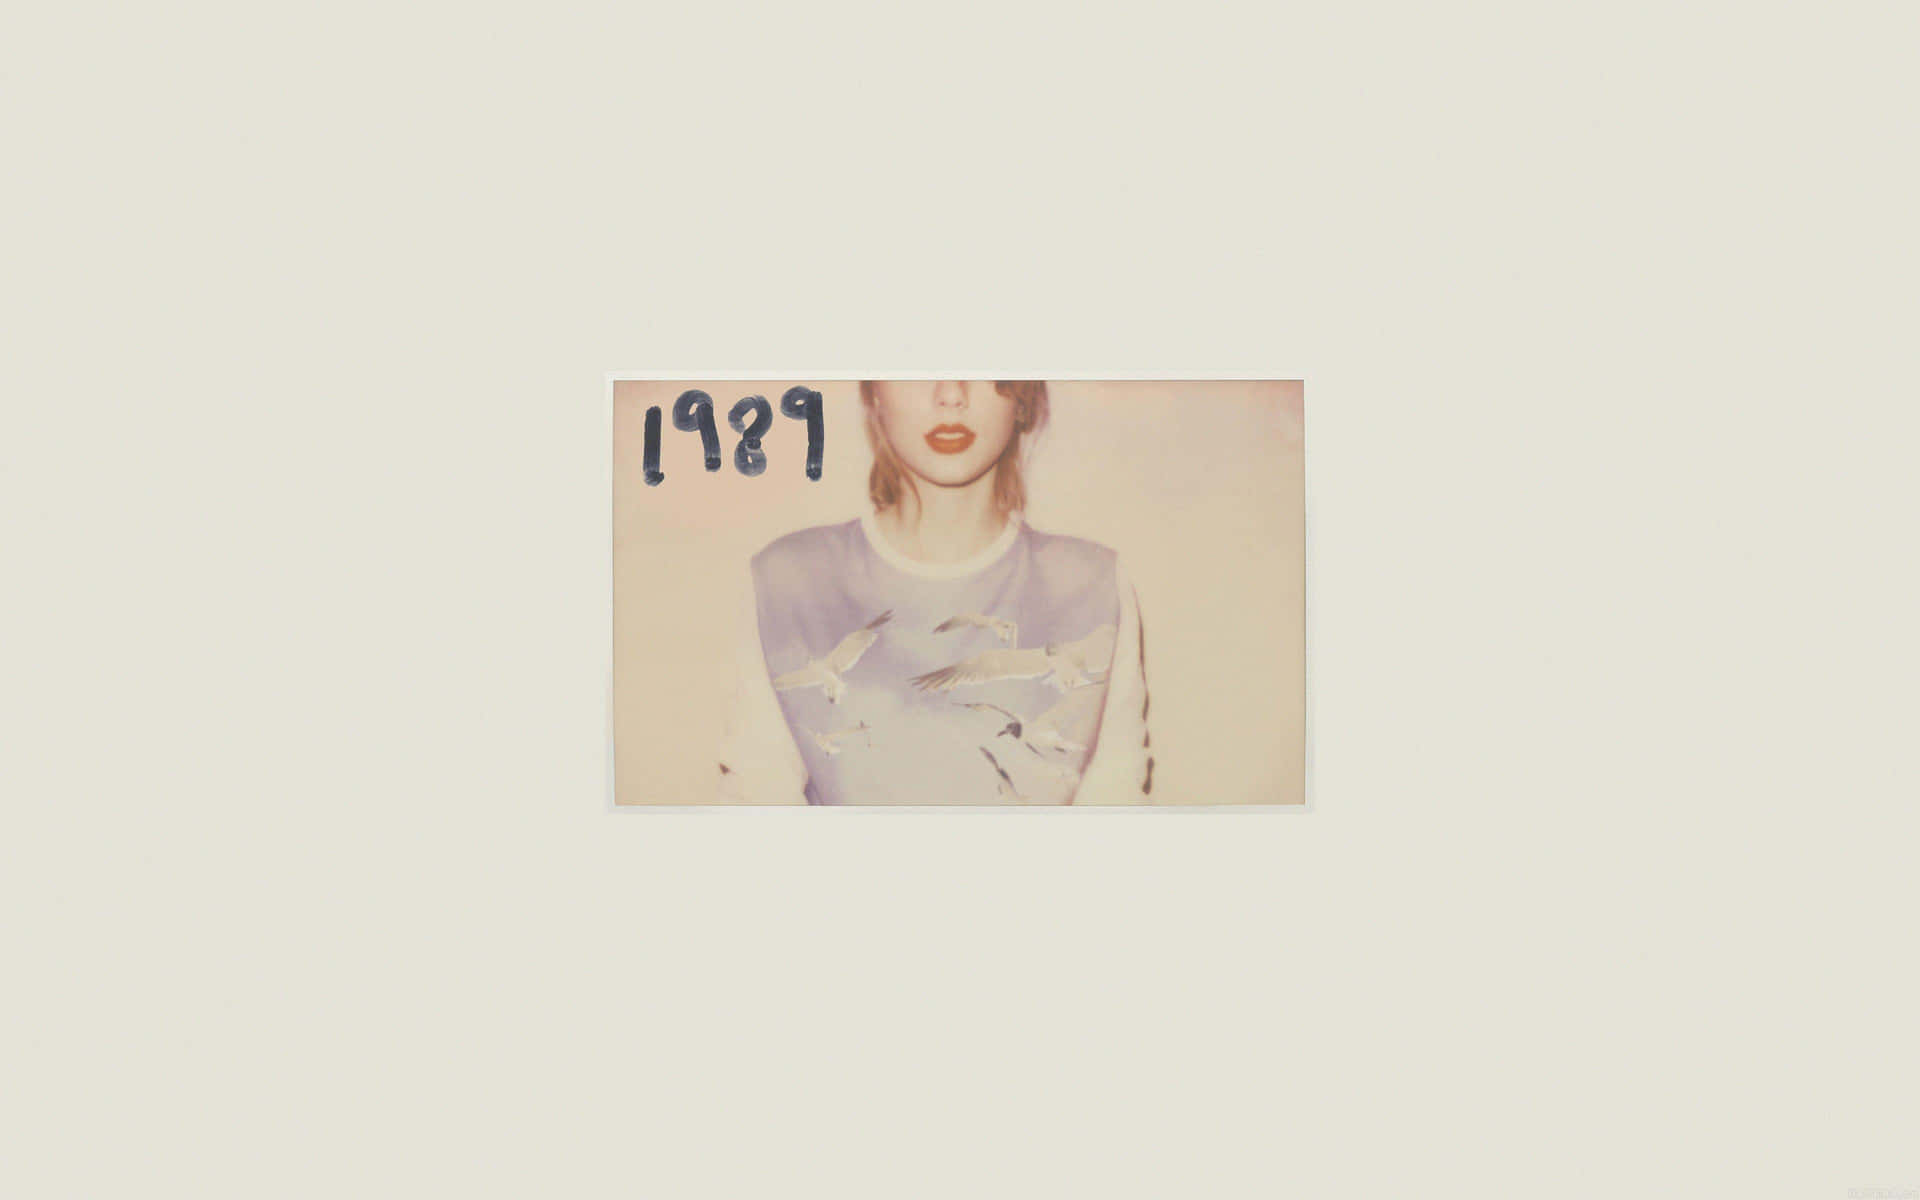 Taylor Swift1989 Polaroid Aesthetic Wallpaper